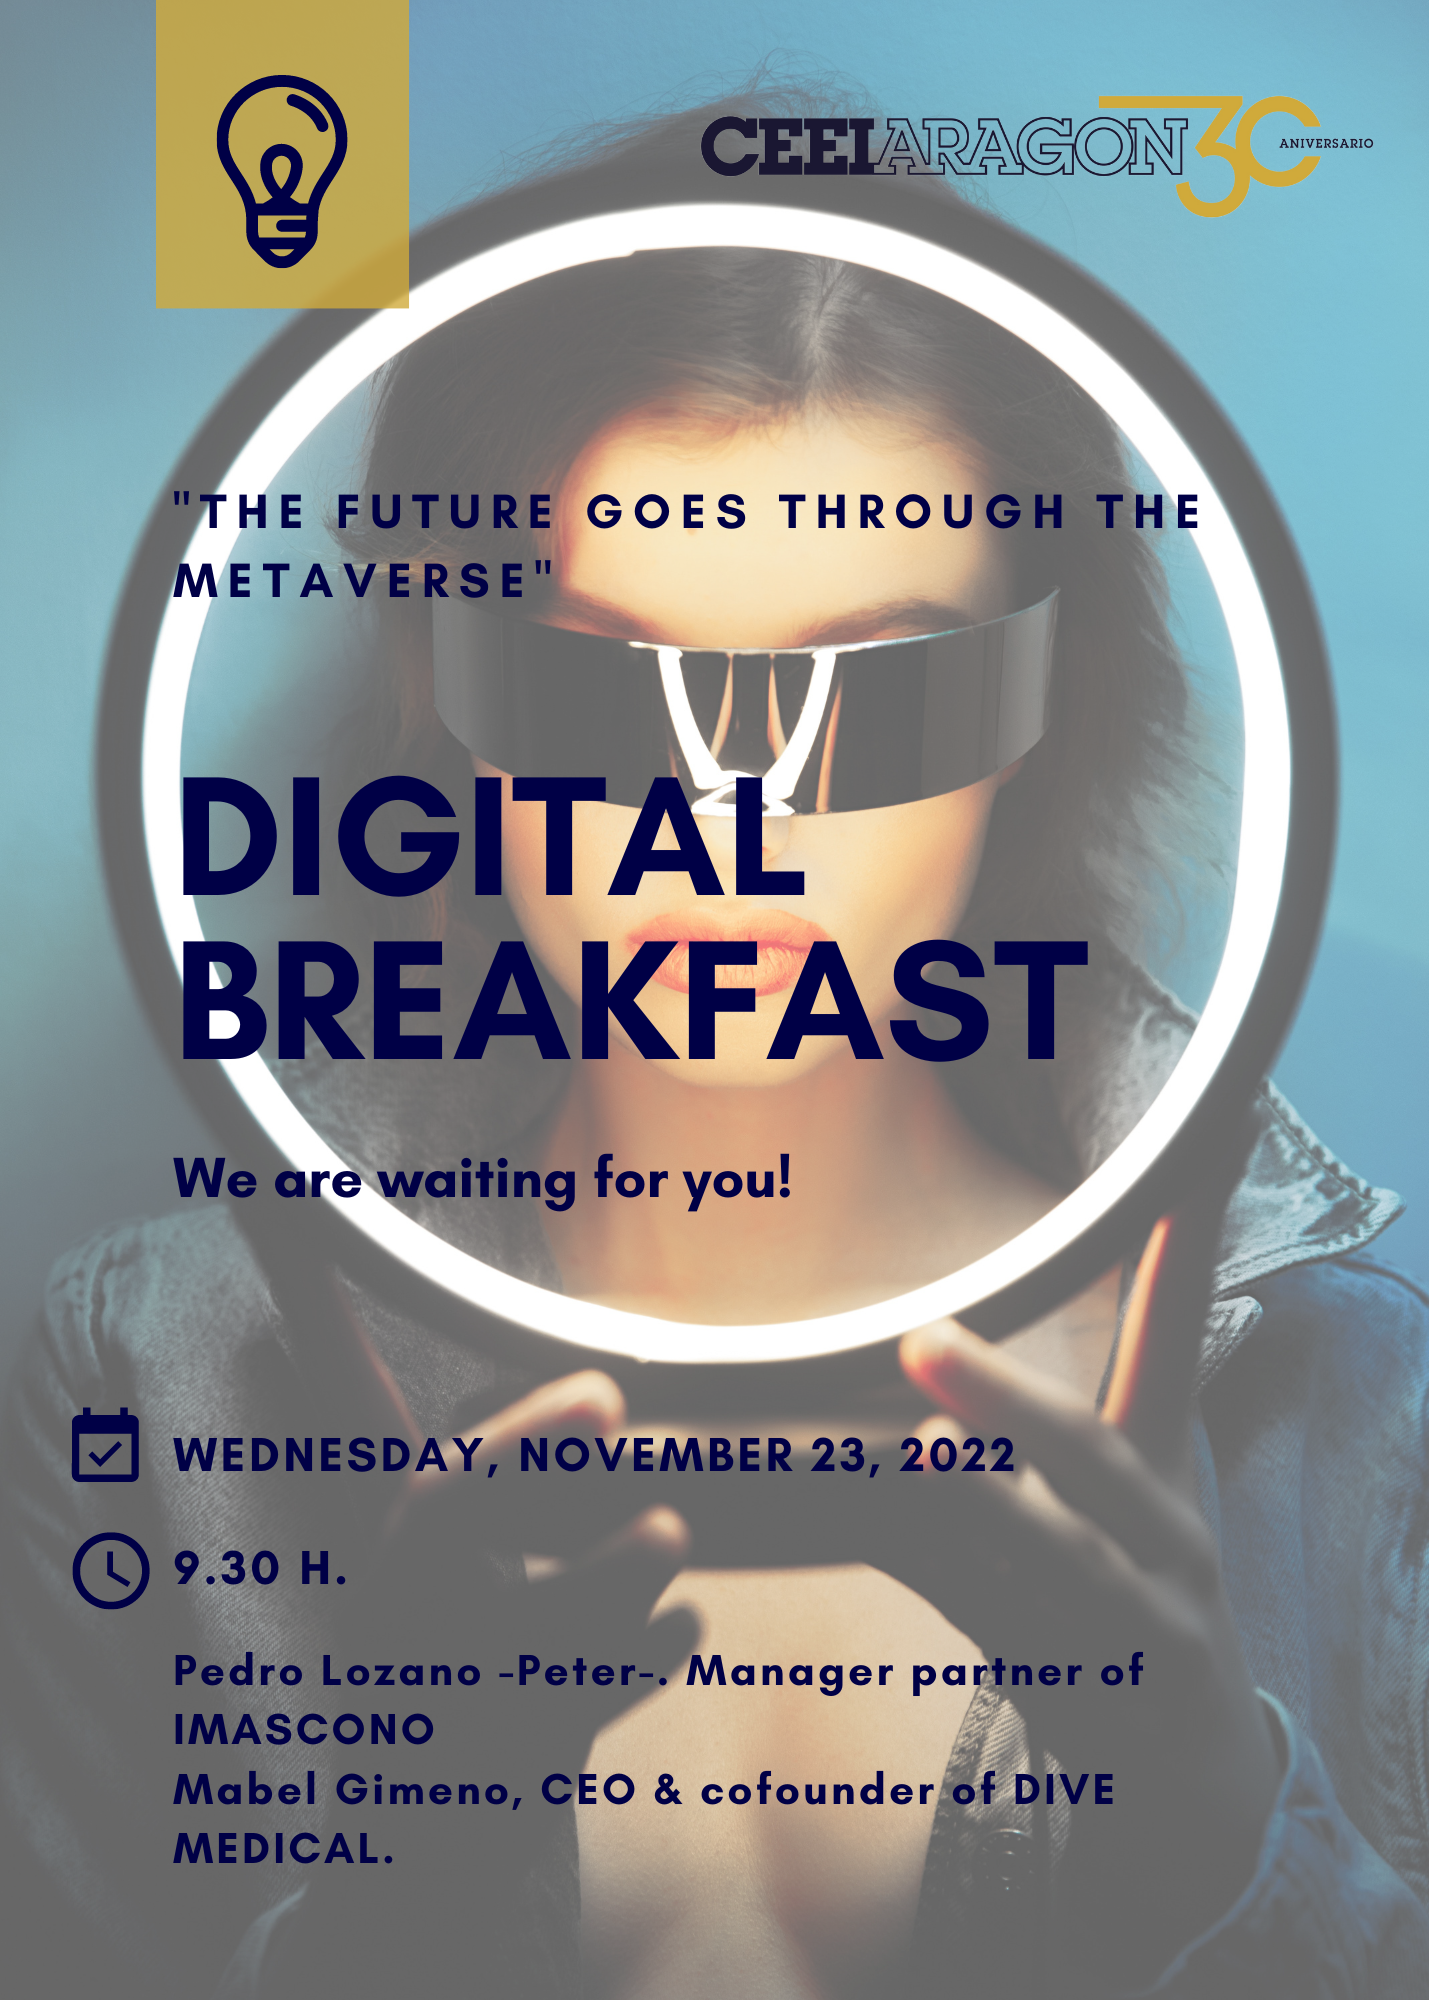 CEEI Digital Breakfast “The future goes through the metaverse”